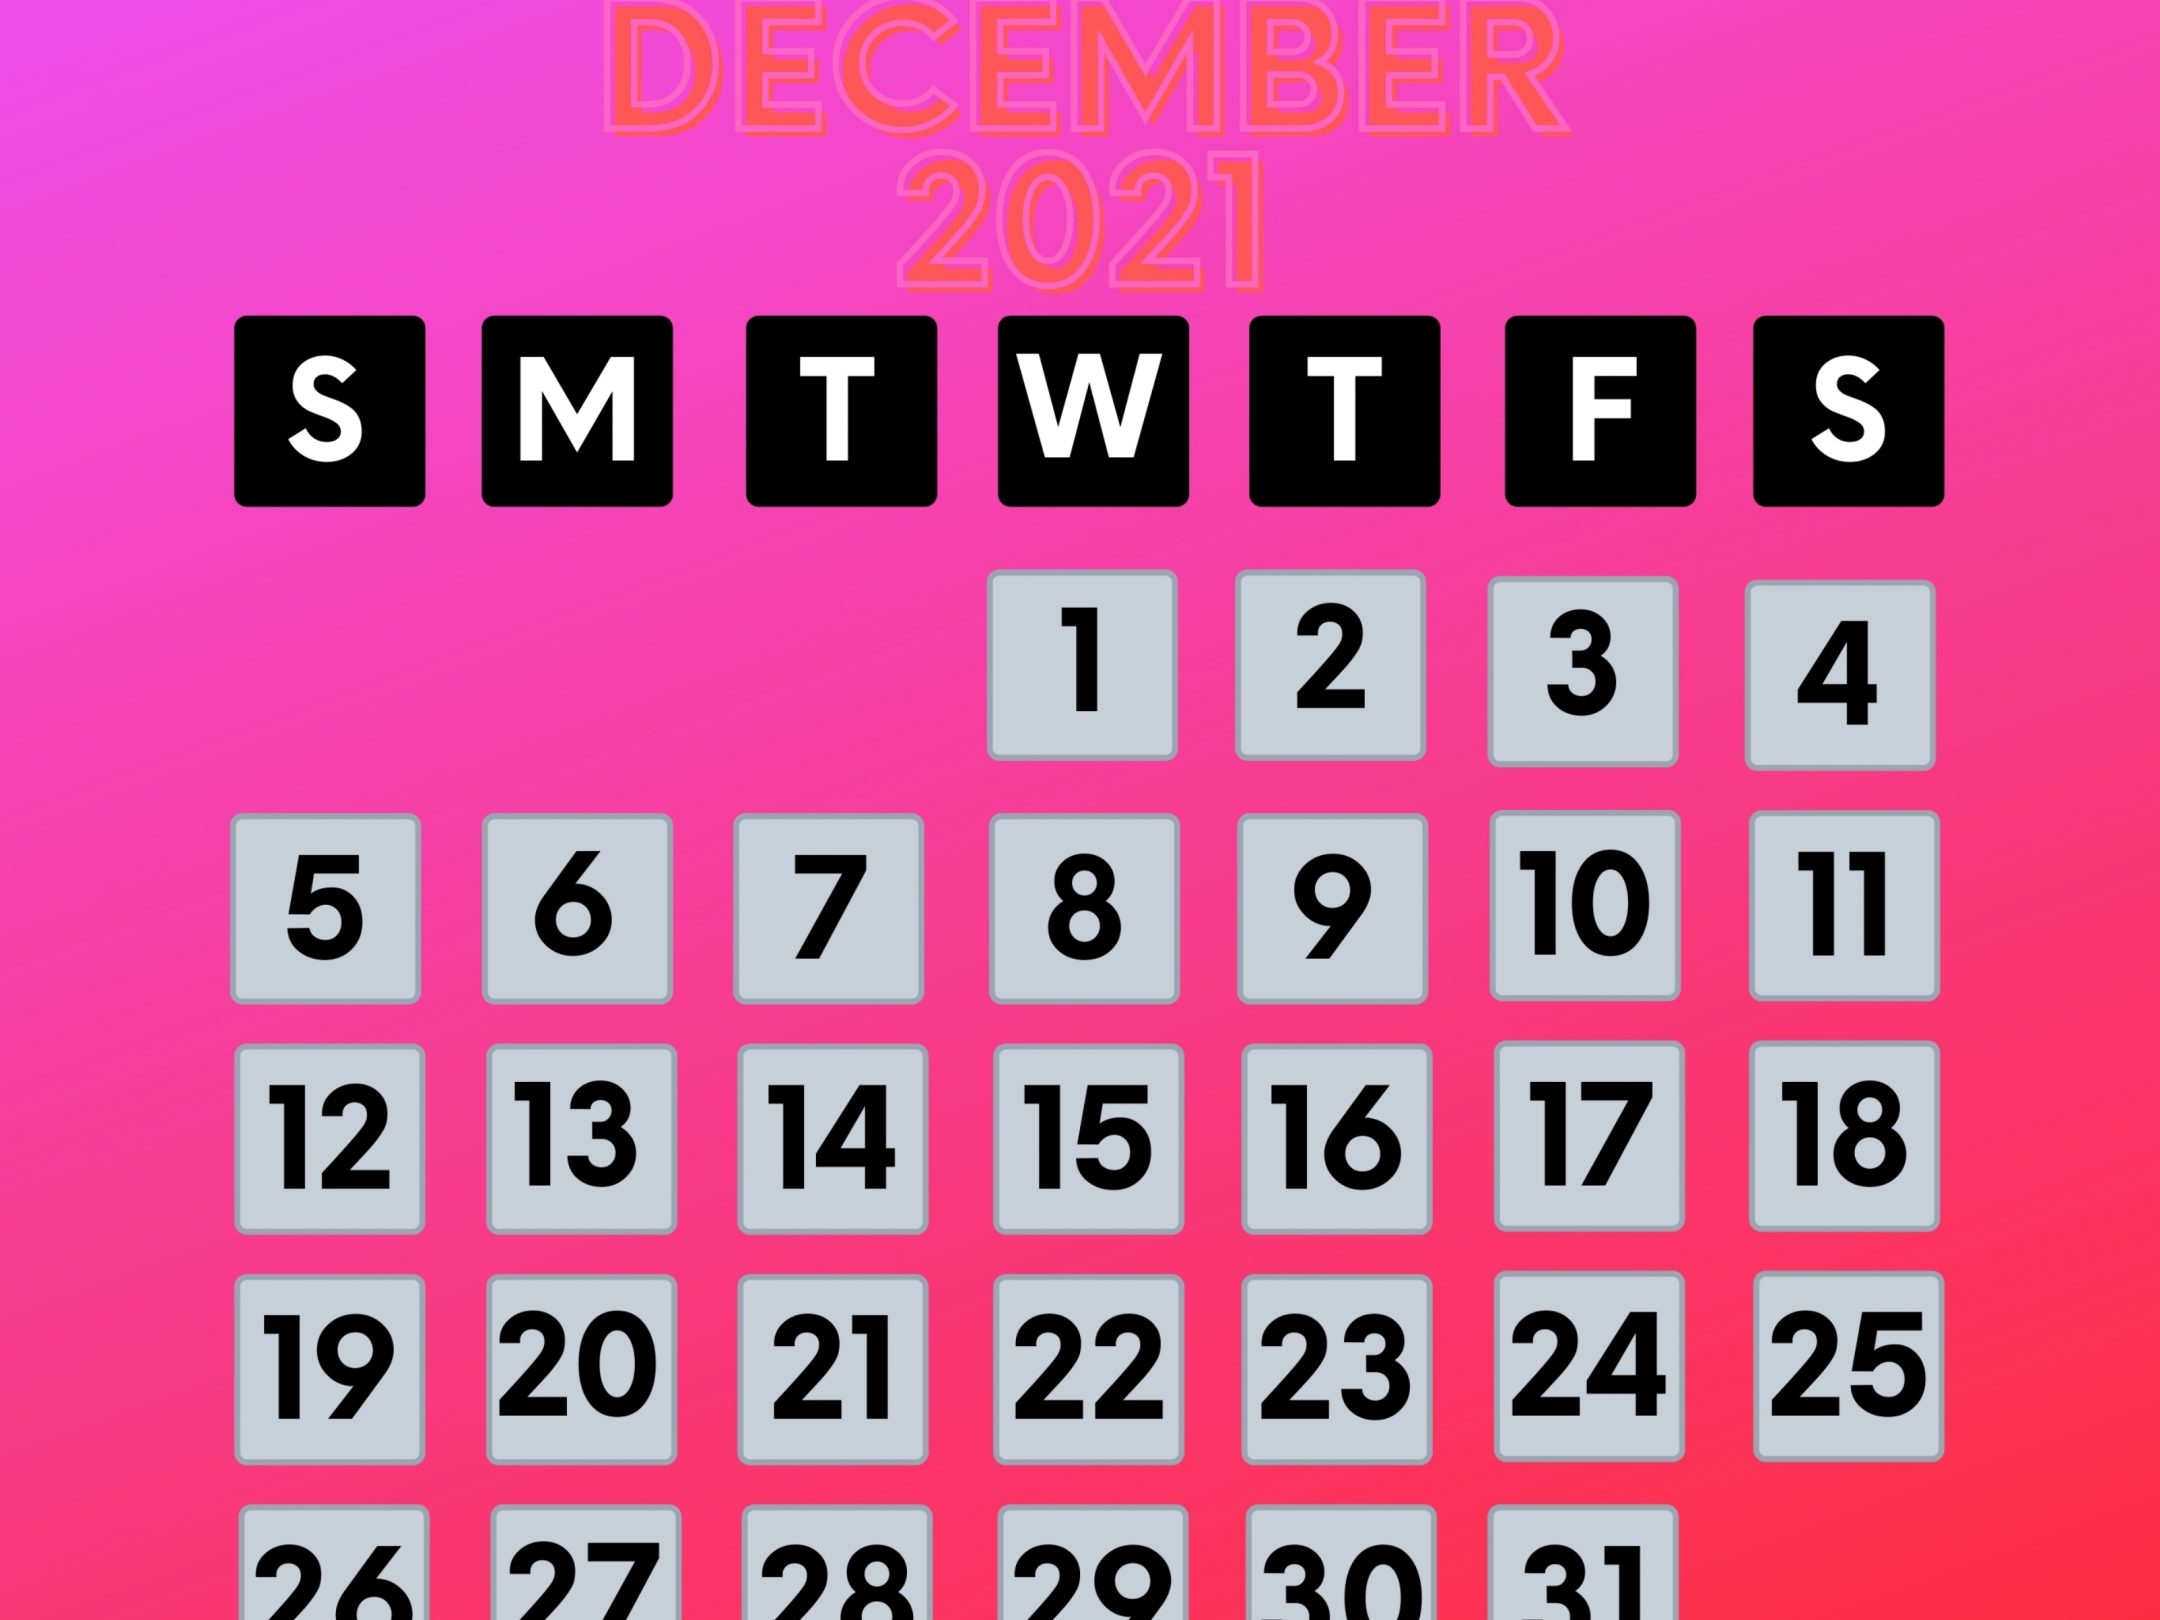 2160x1620 iPad wallpaper 4k December 2021 Calendar iPad Wallpaper 2160x1620 pixels resolution